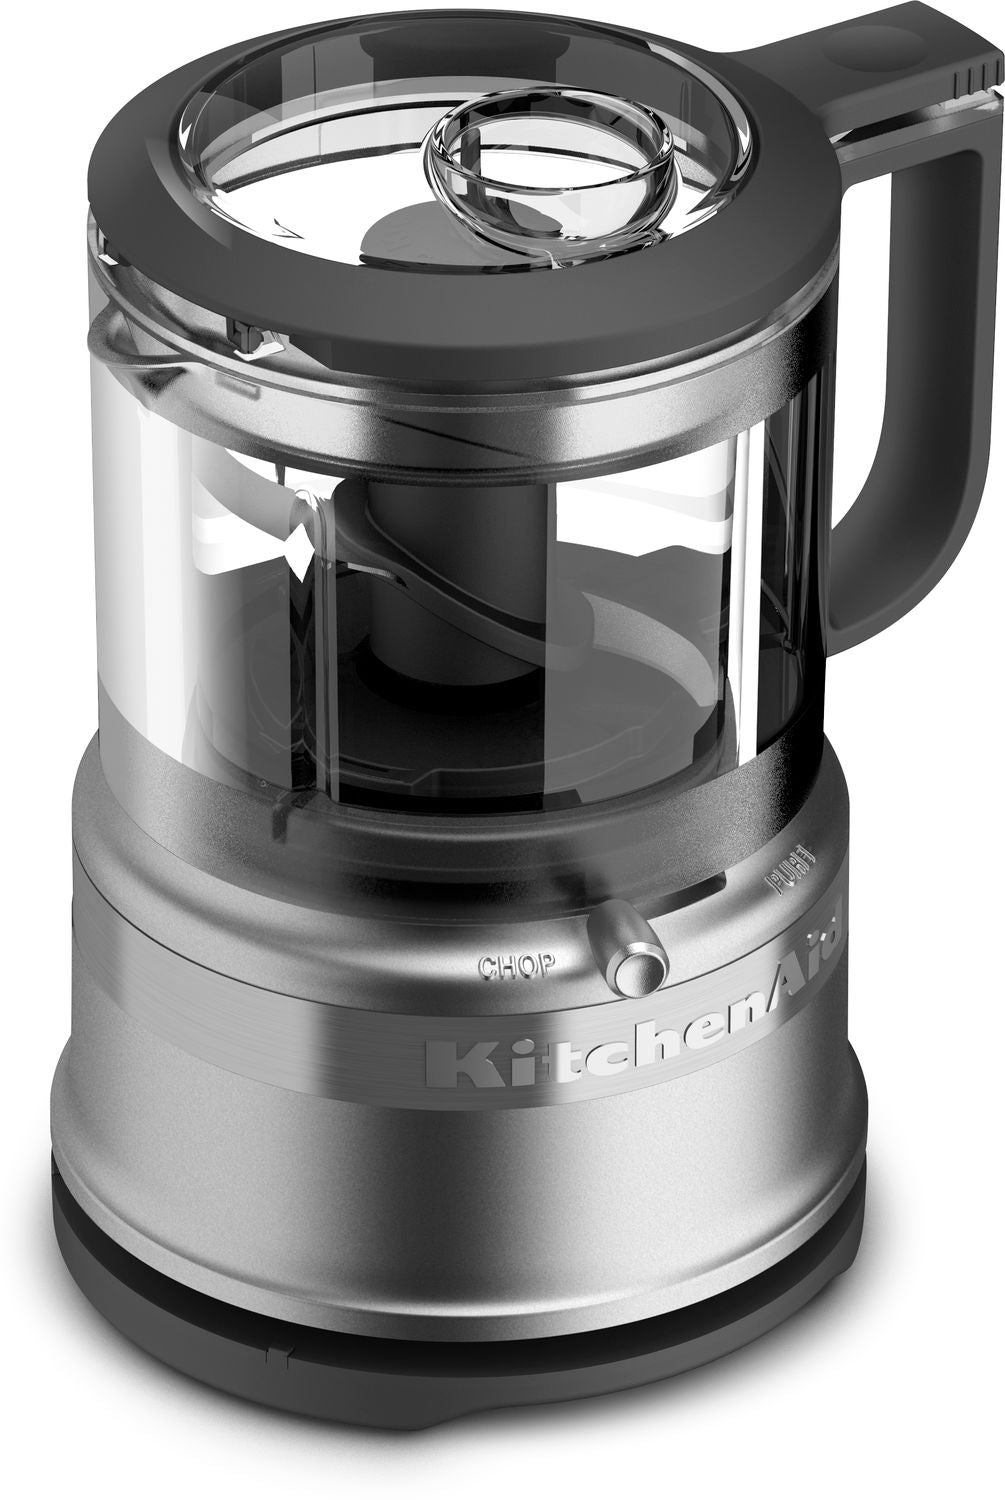 KitchenAid Contour Silver 3.5-Cup Mini Food Processor - KFC3516CU